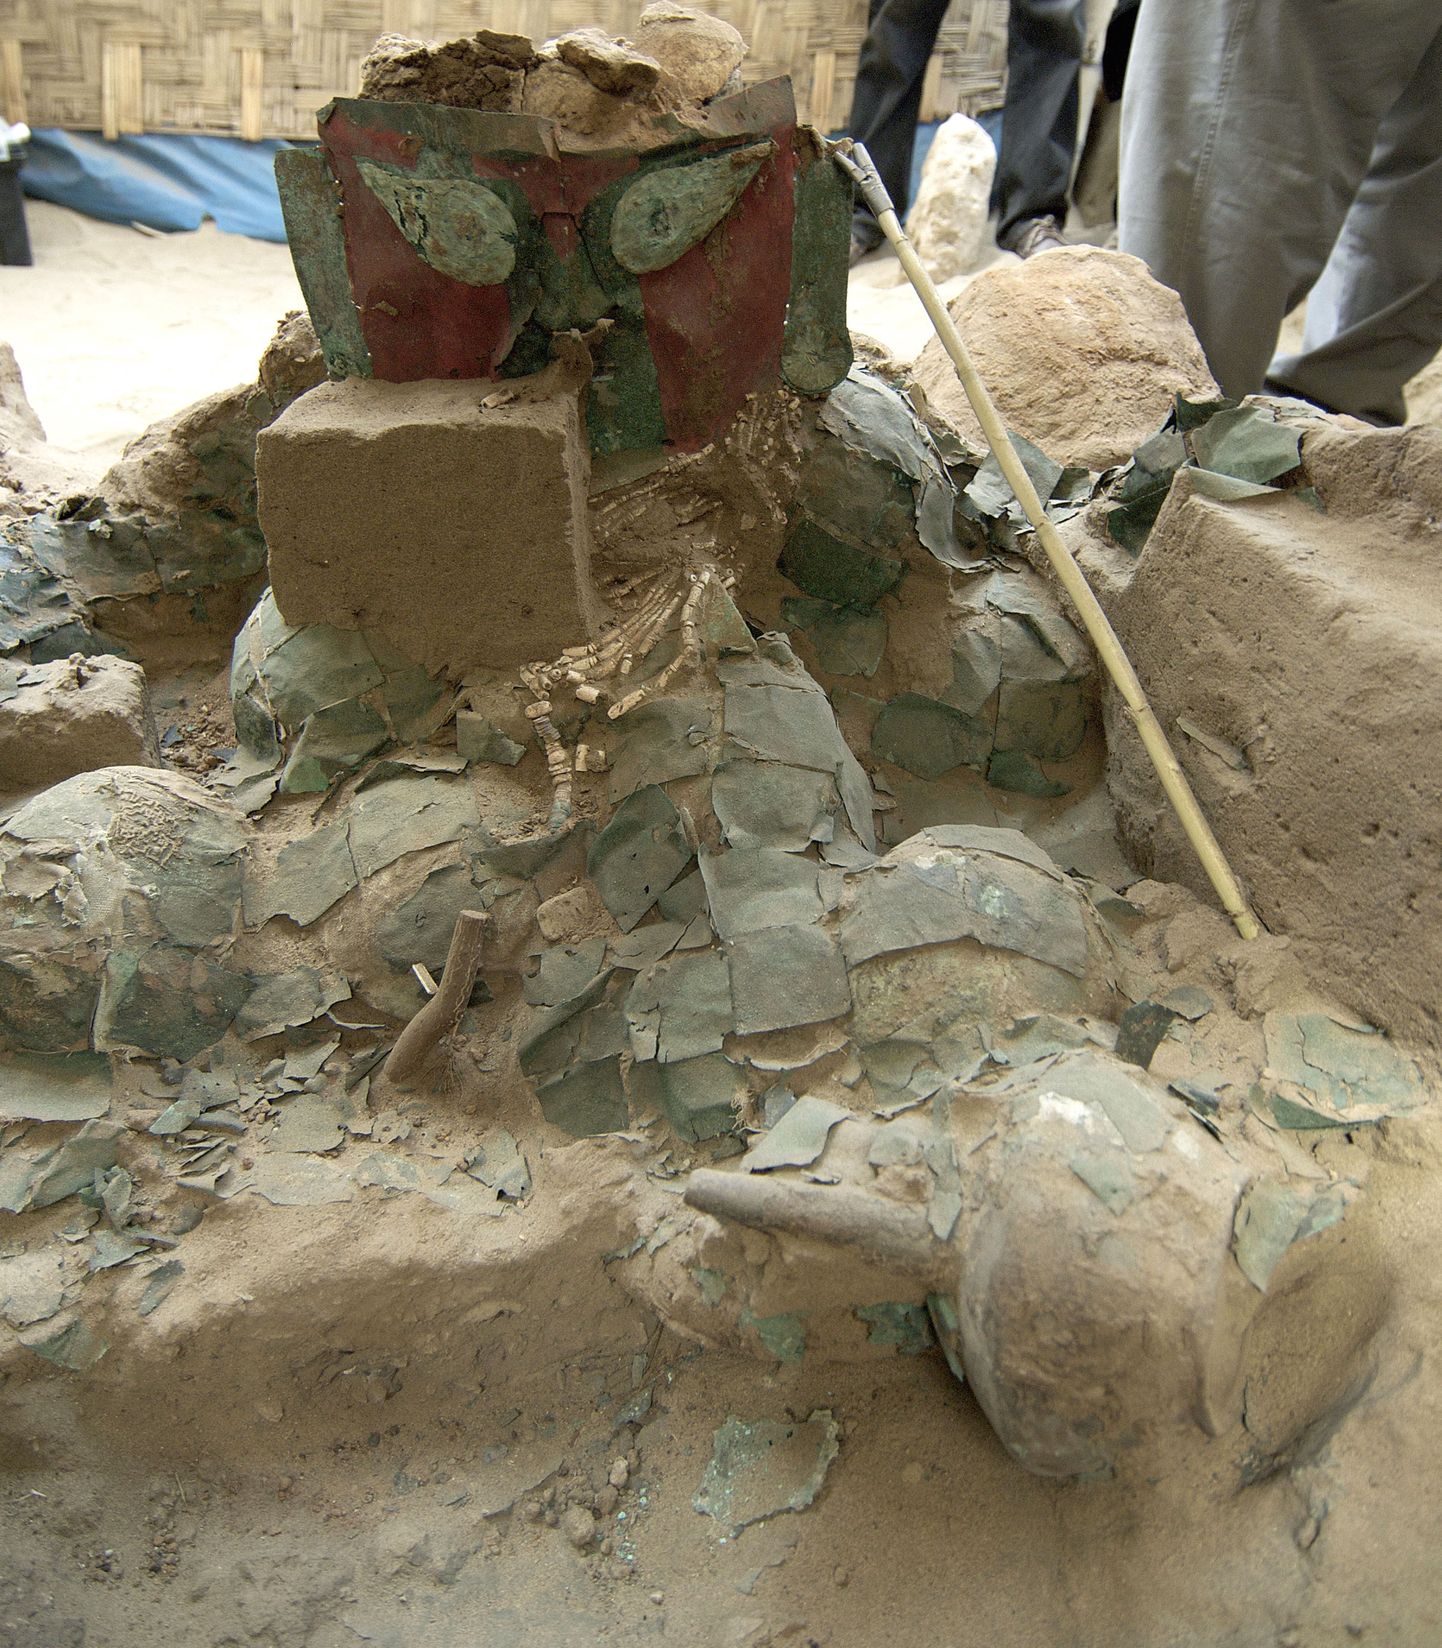 Peruust leiti inkade matmispaik